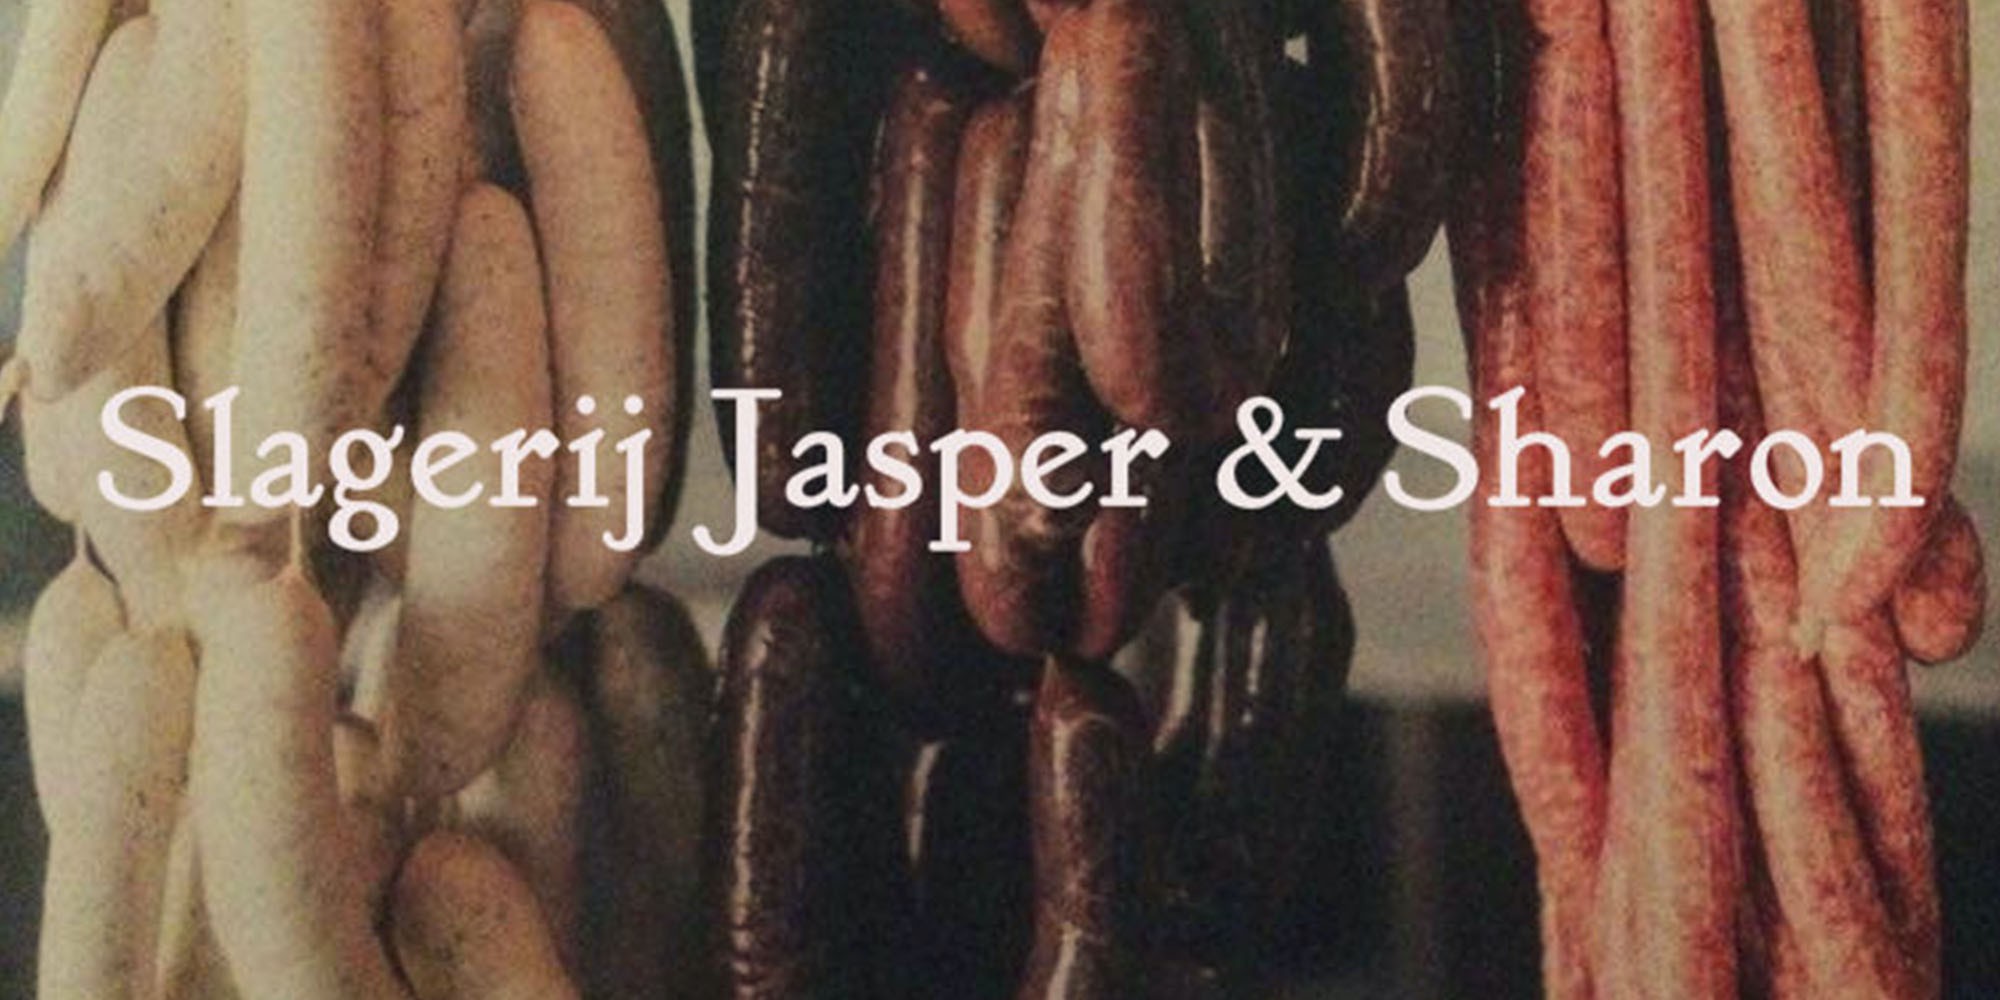 Header Slagerij Jasper & Sharon - Barbecue Schilde